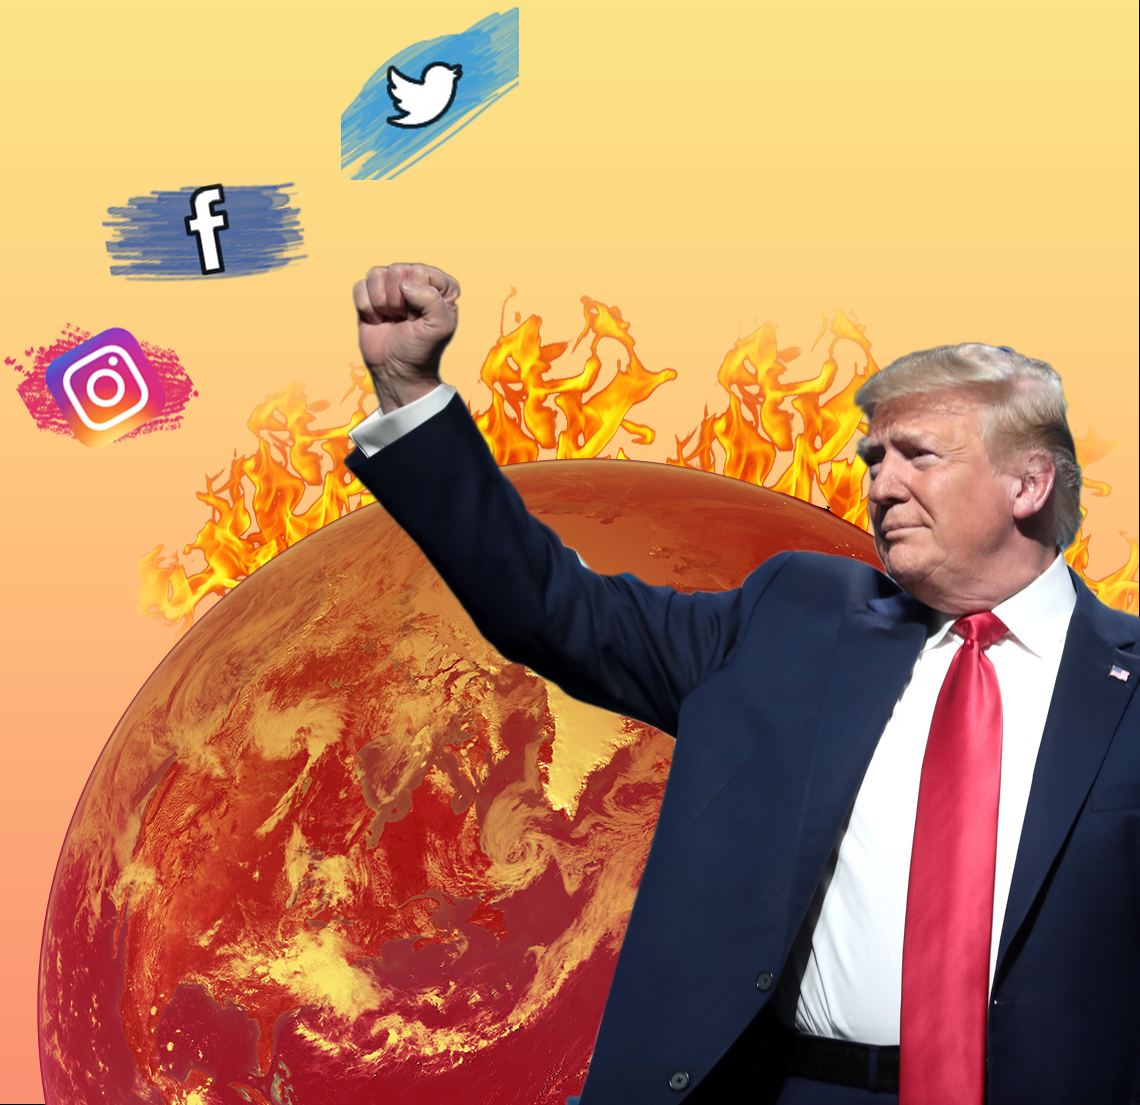 Climate denial is rampant on social media